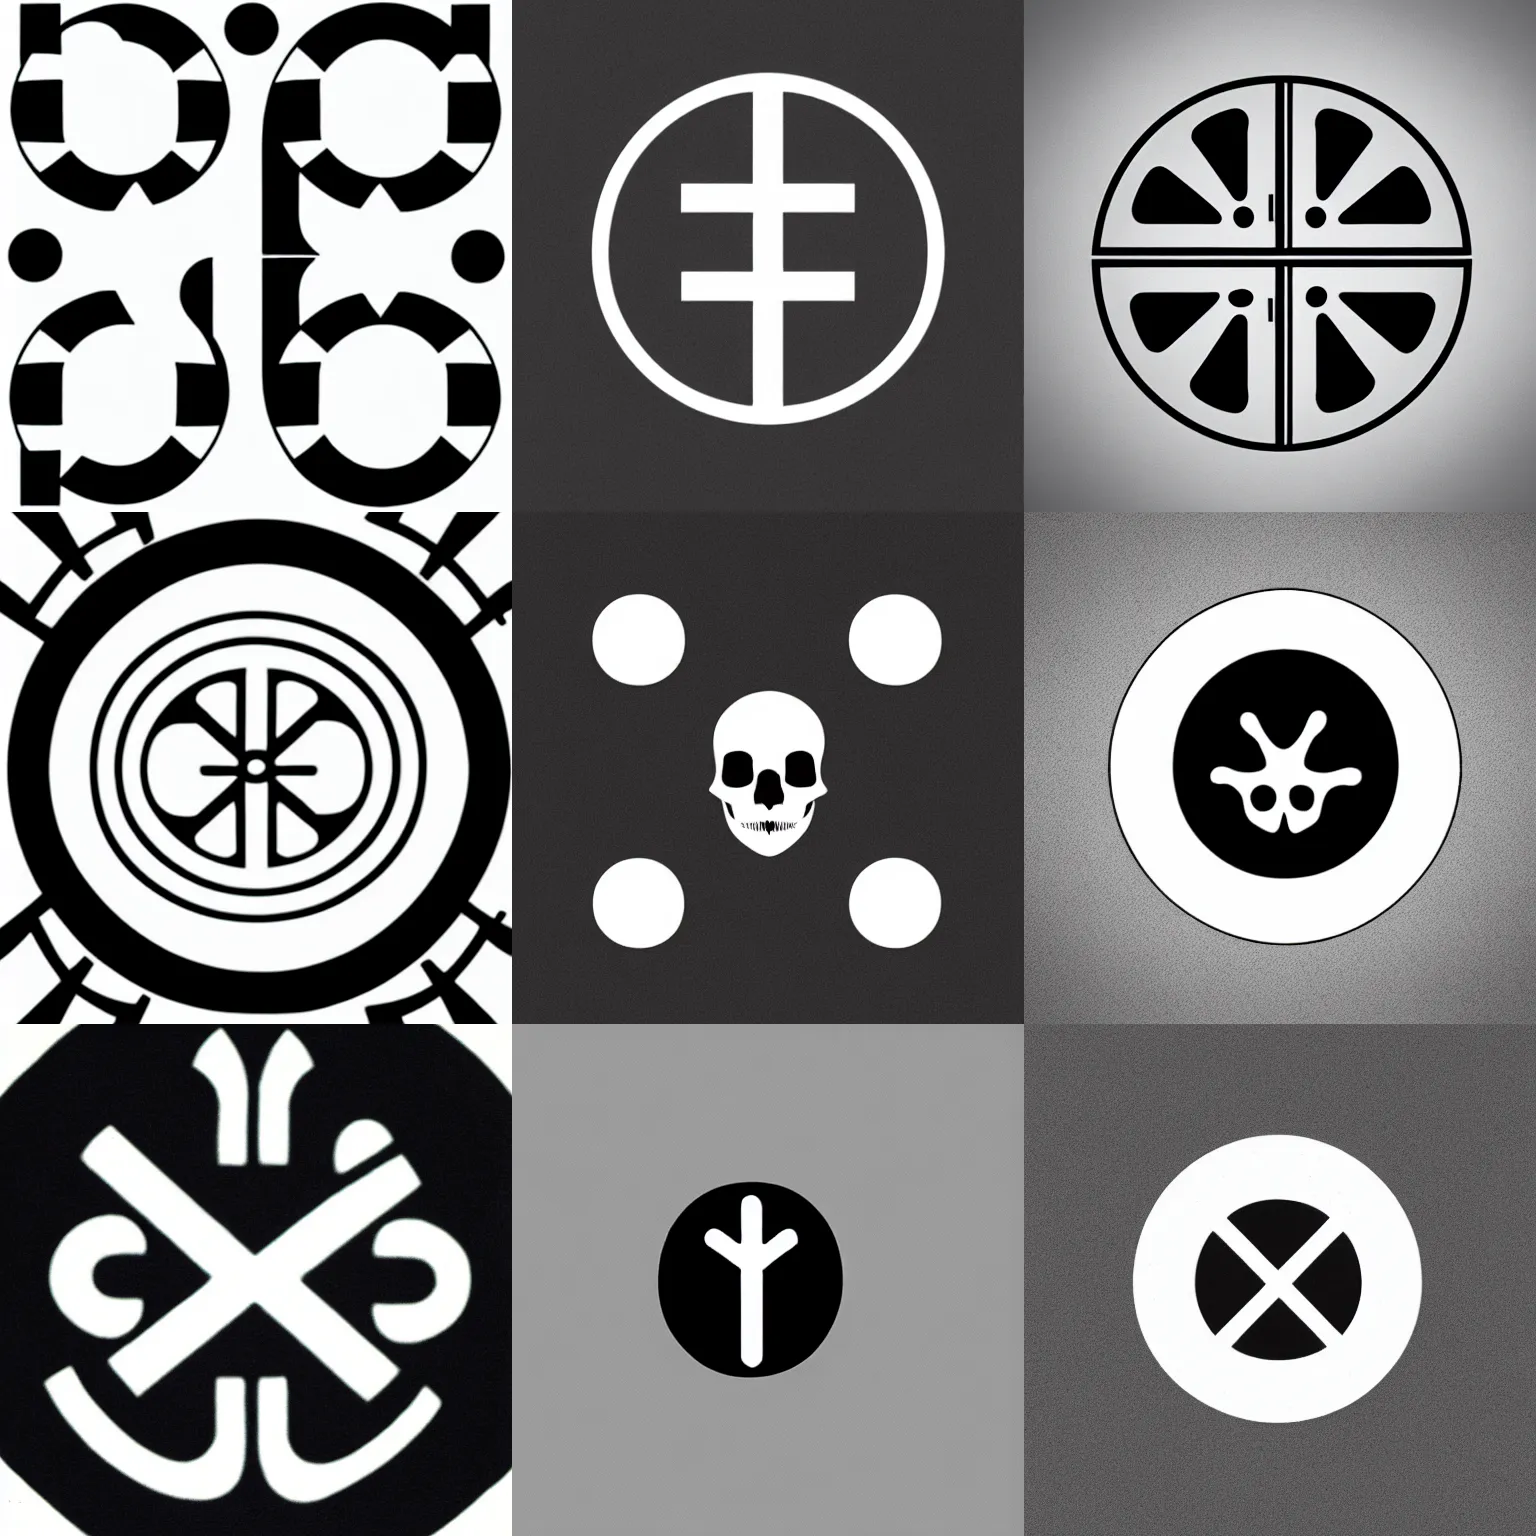 Prompt: minimal memento mori logo by karl gerstner, monochrome, symmetrical